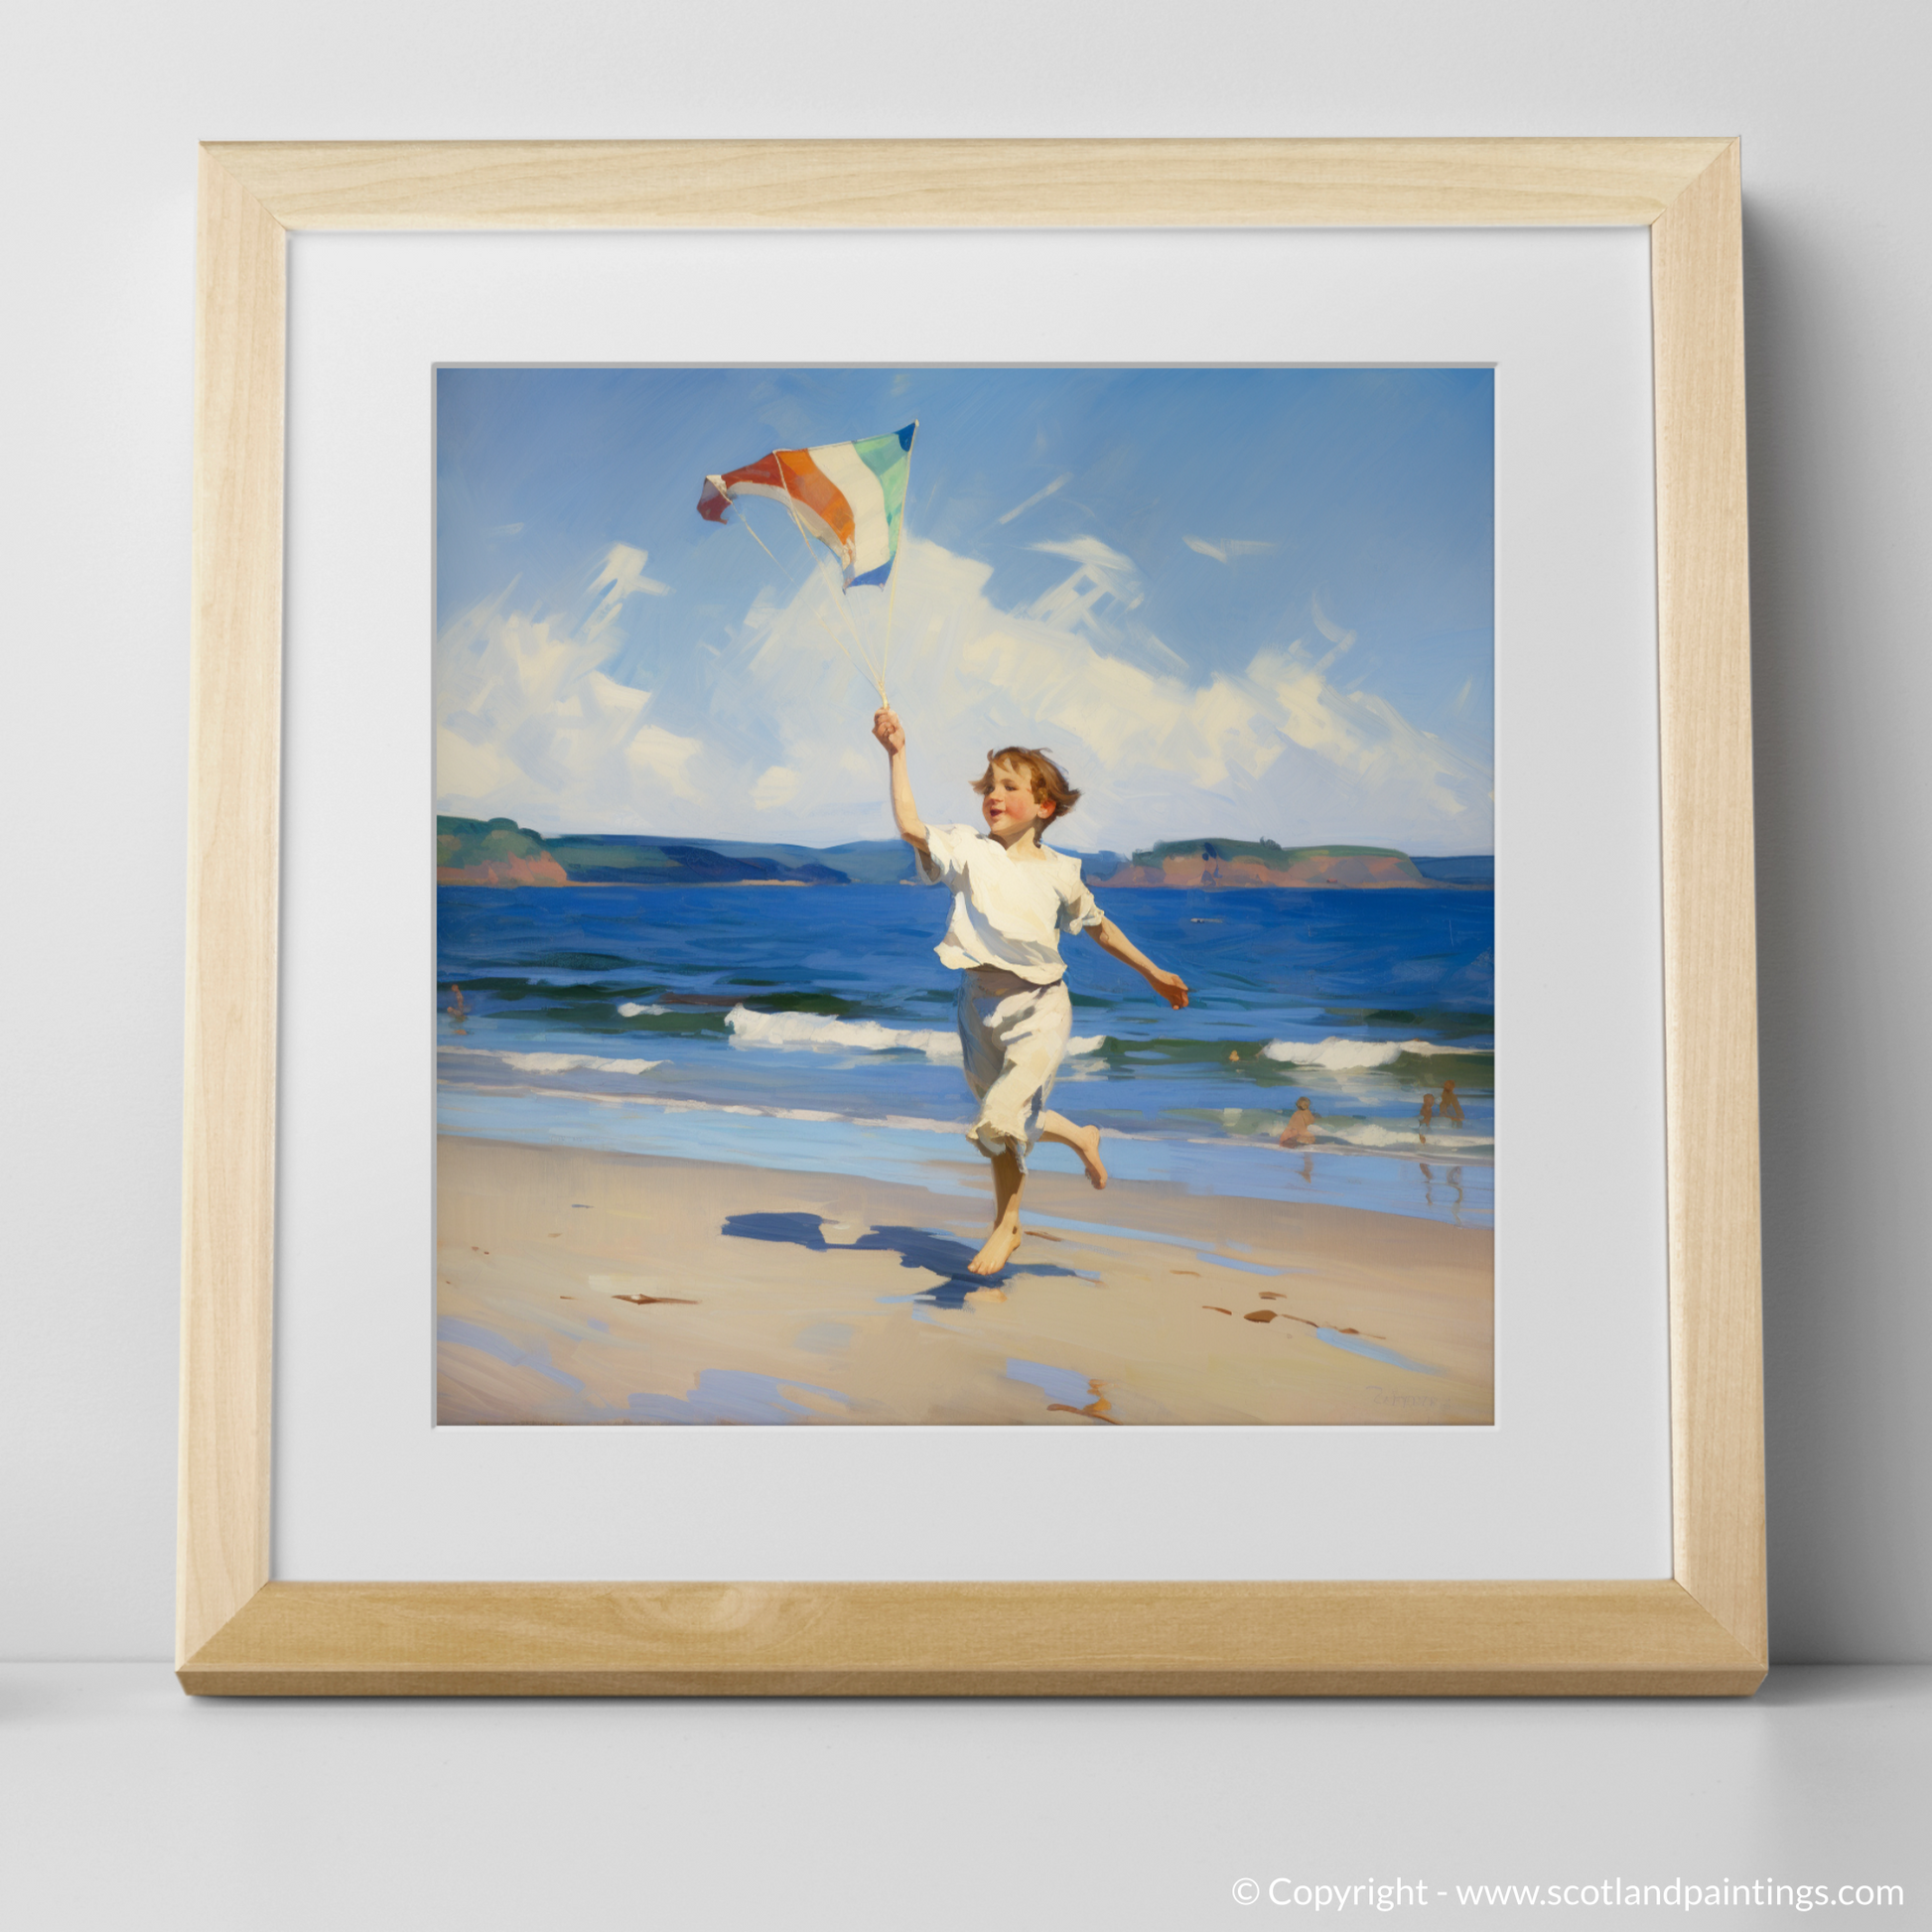 Art Print of A boy flying a kite at Culzean Beach with a natural frame